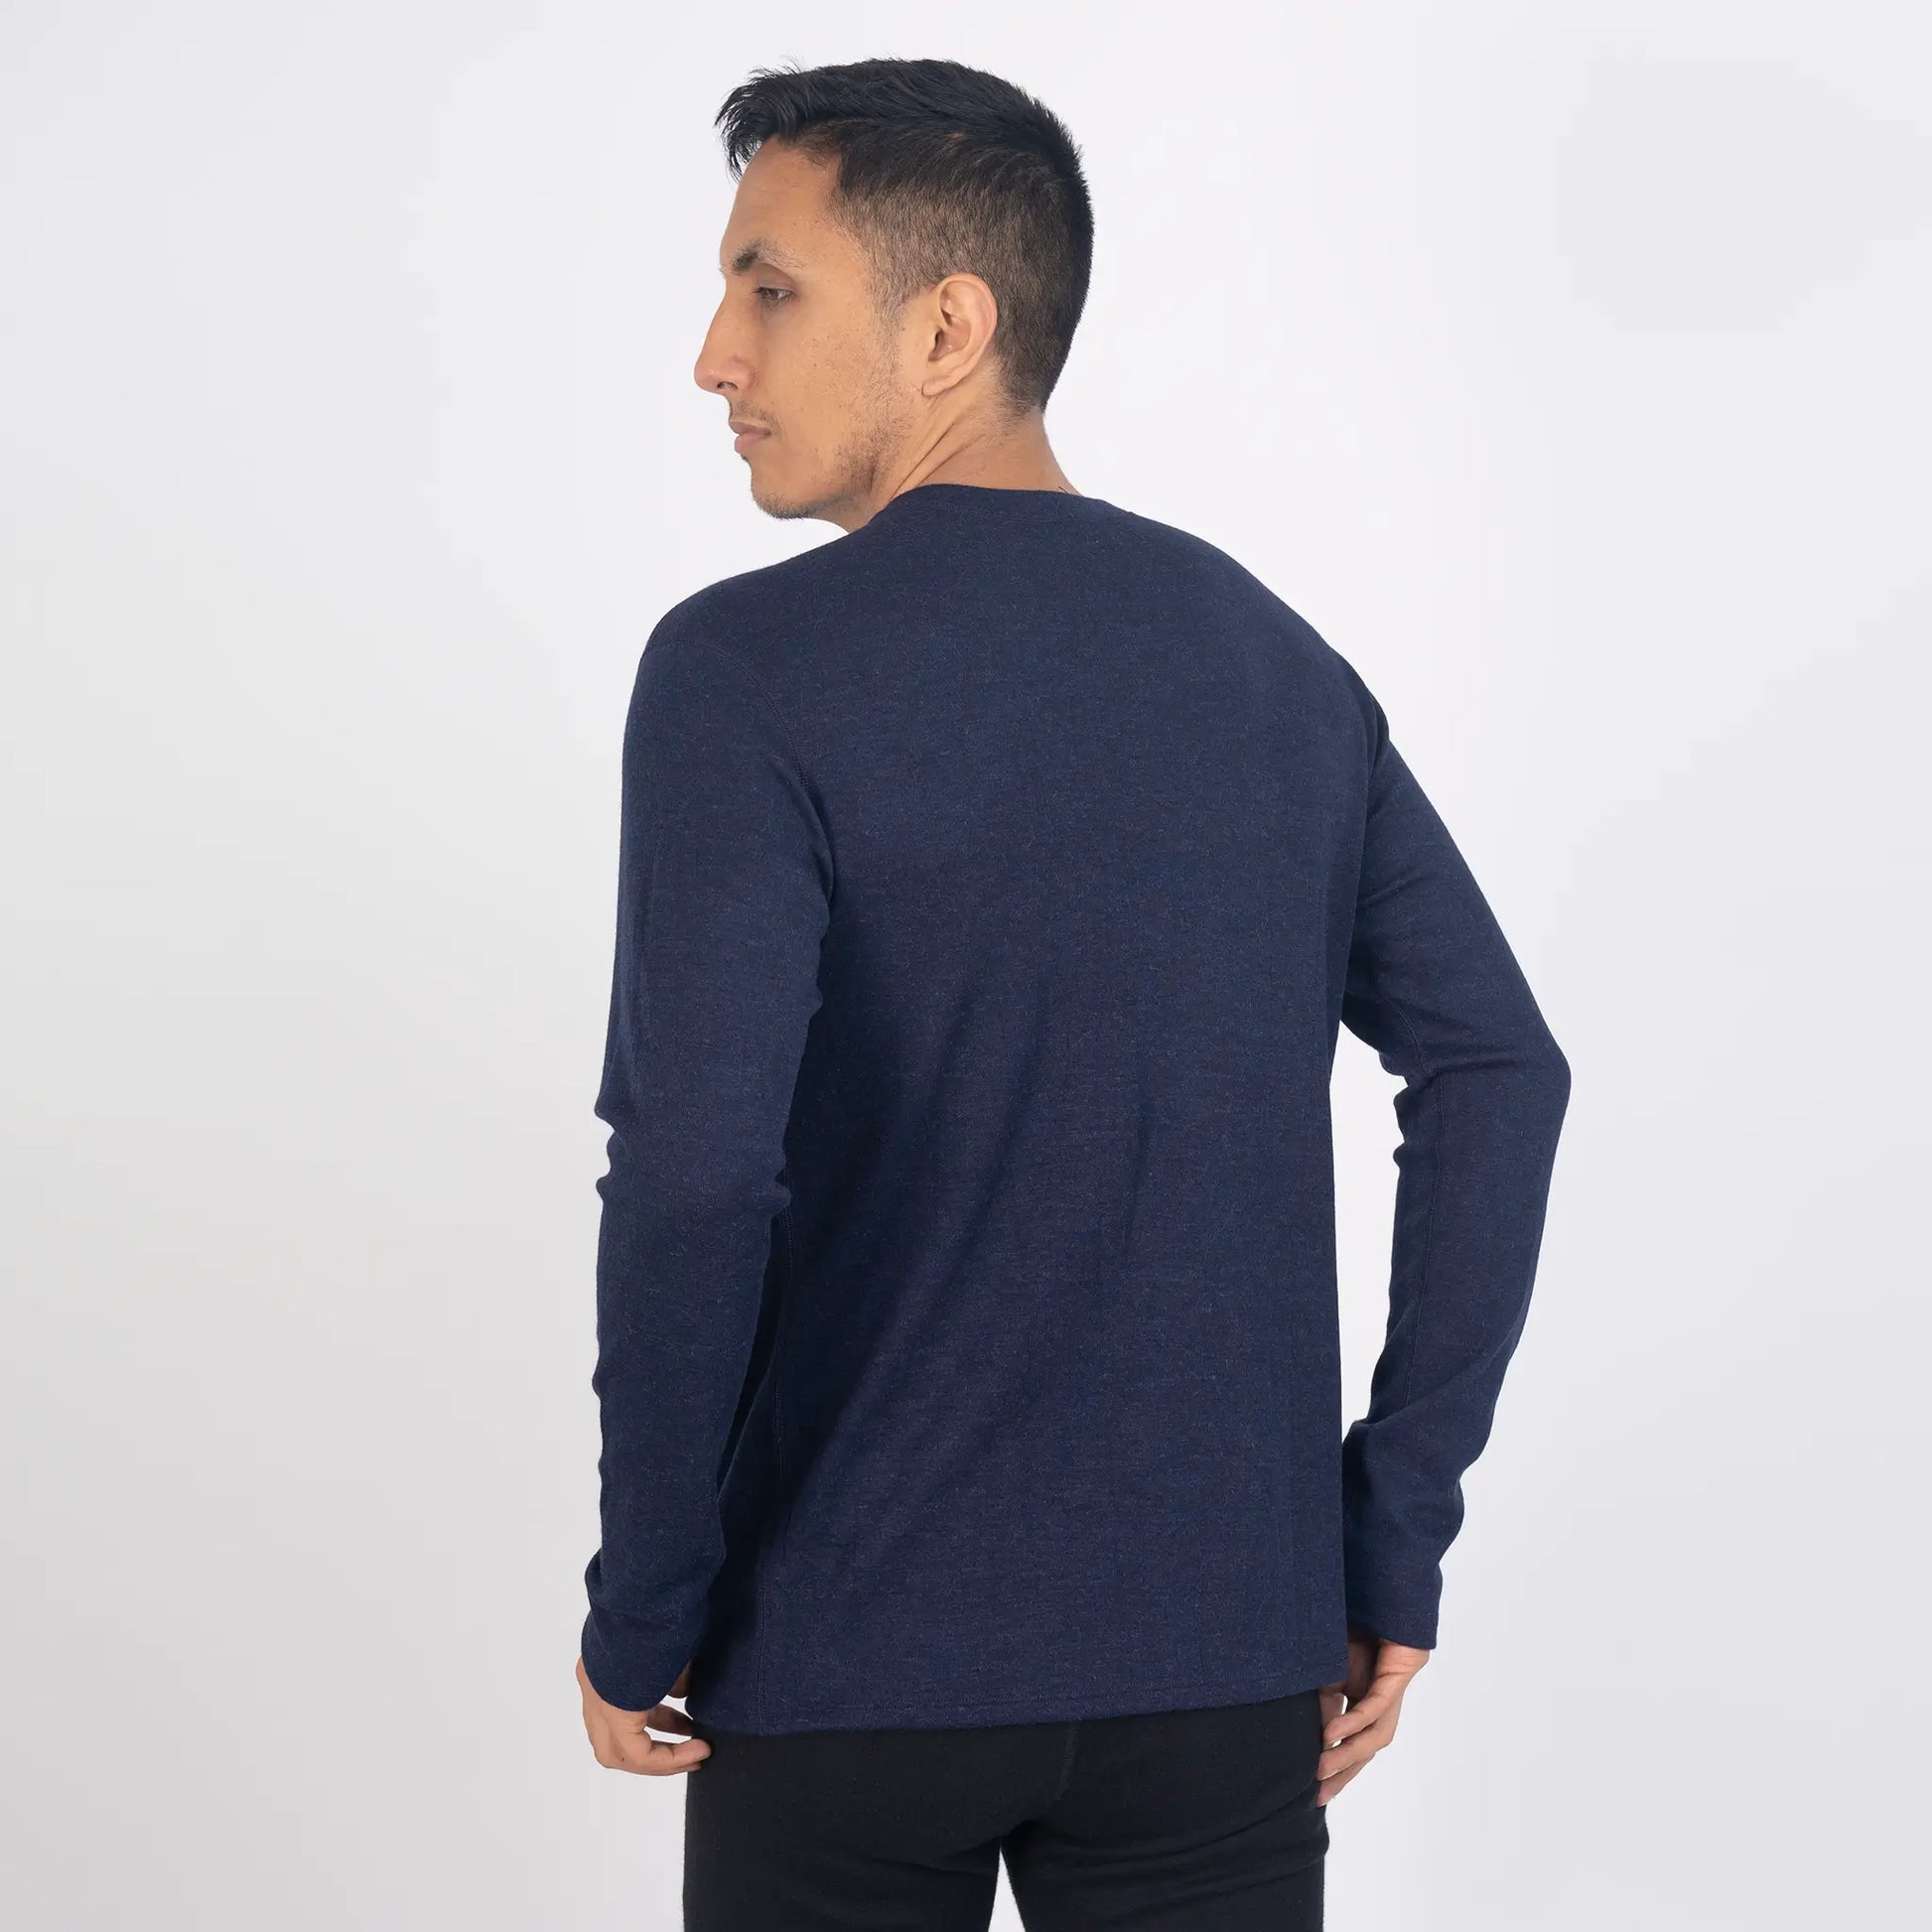 mens alpaca sweater sweat wicking lightweight color navy blue